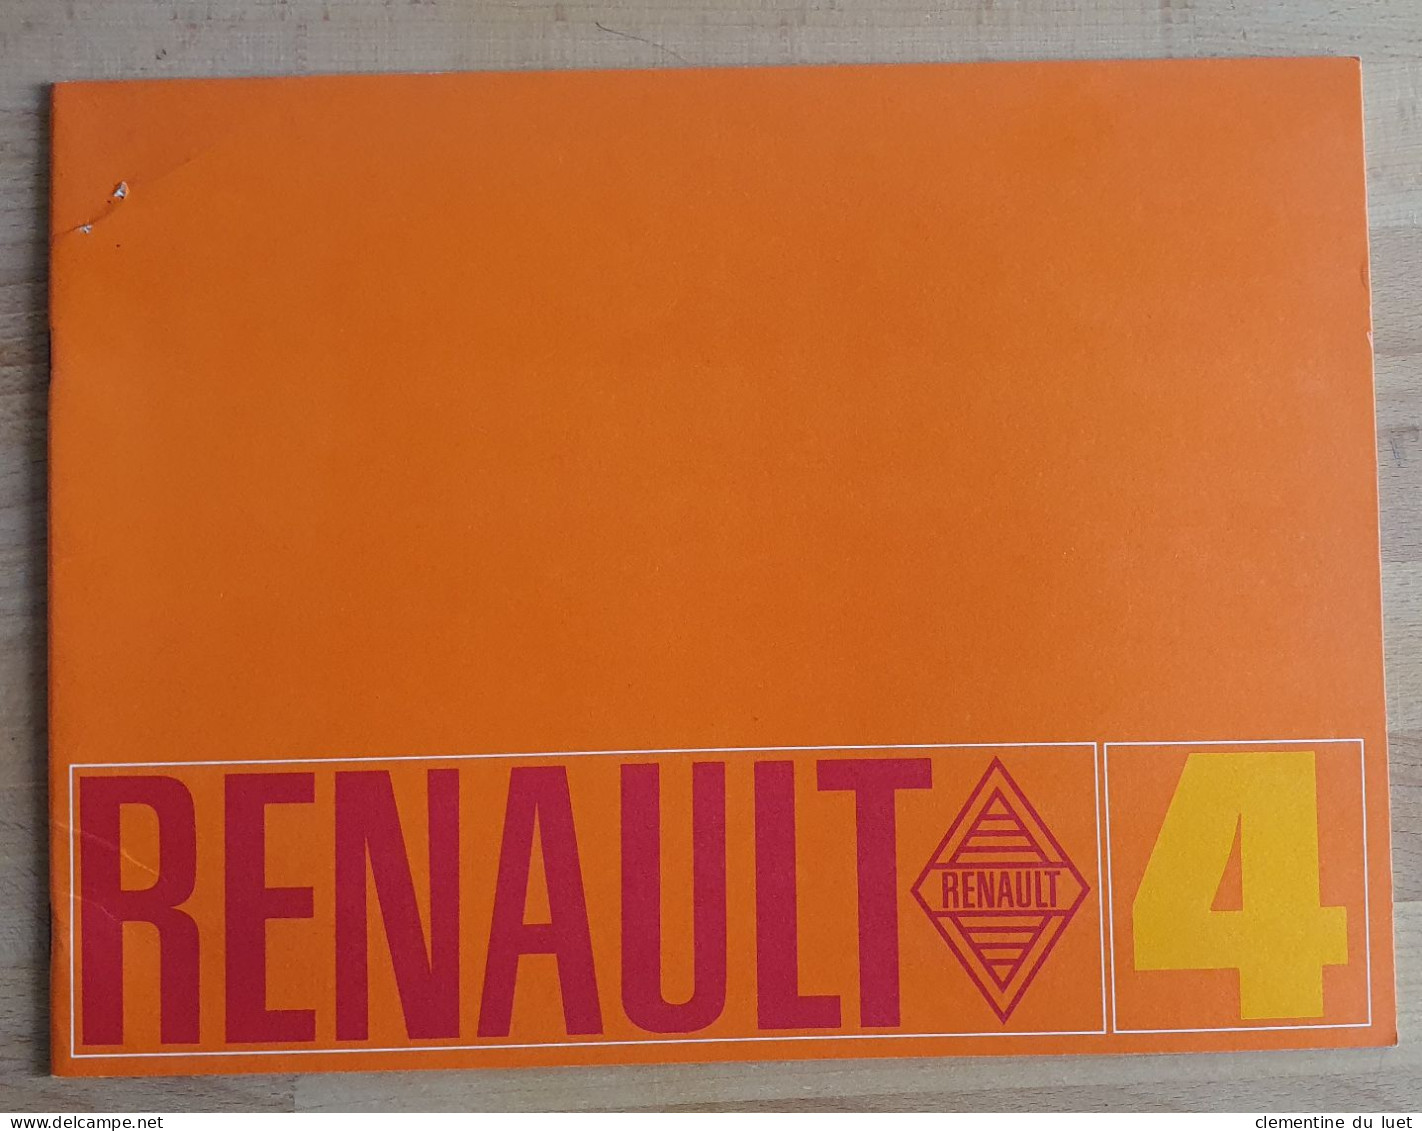 DOCUMENTS BROCHURE RENAULT 4 L - Cars